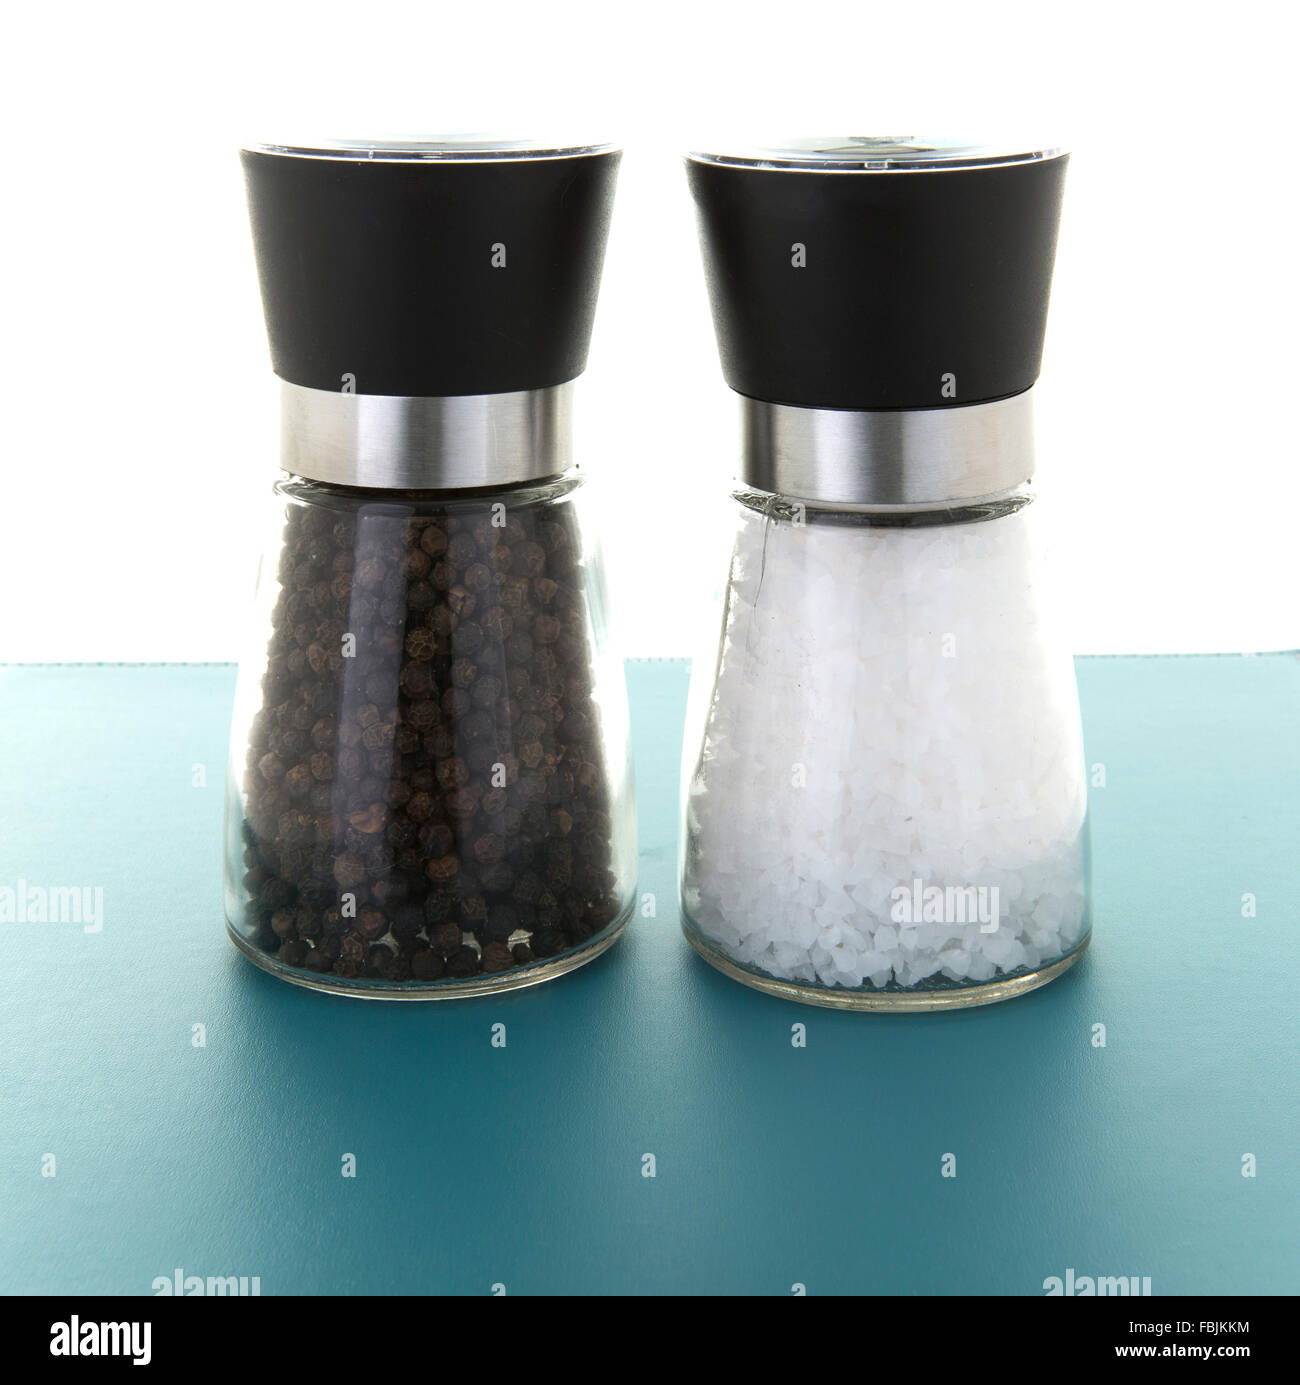 https://c8.alamy.com/comp/FBJKKM/glass-salt-and-pepper-grinders-FBJKKM.jpg